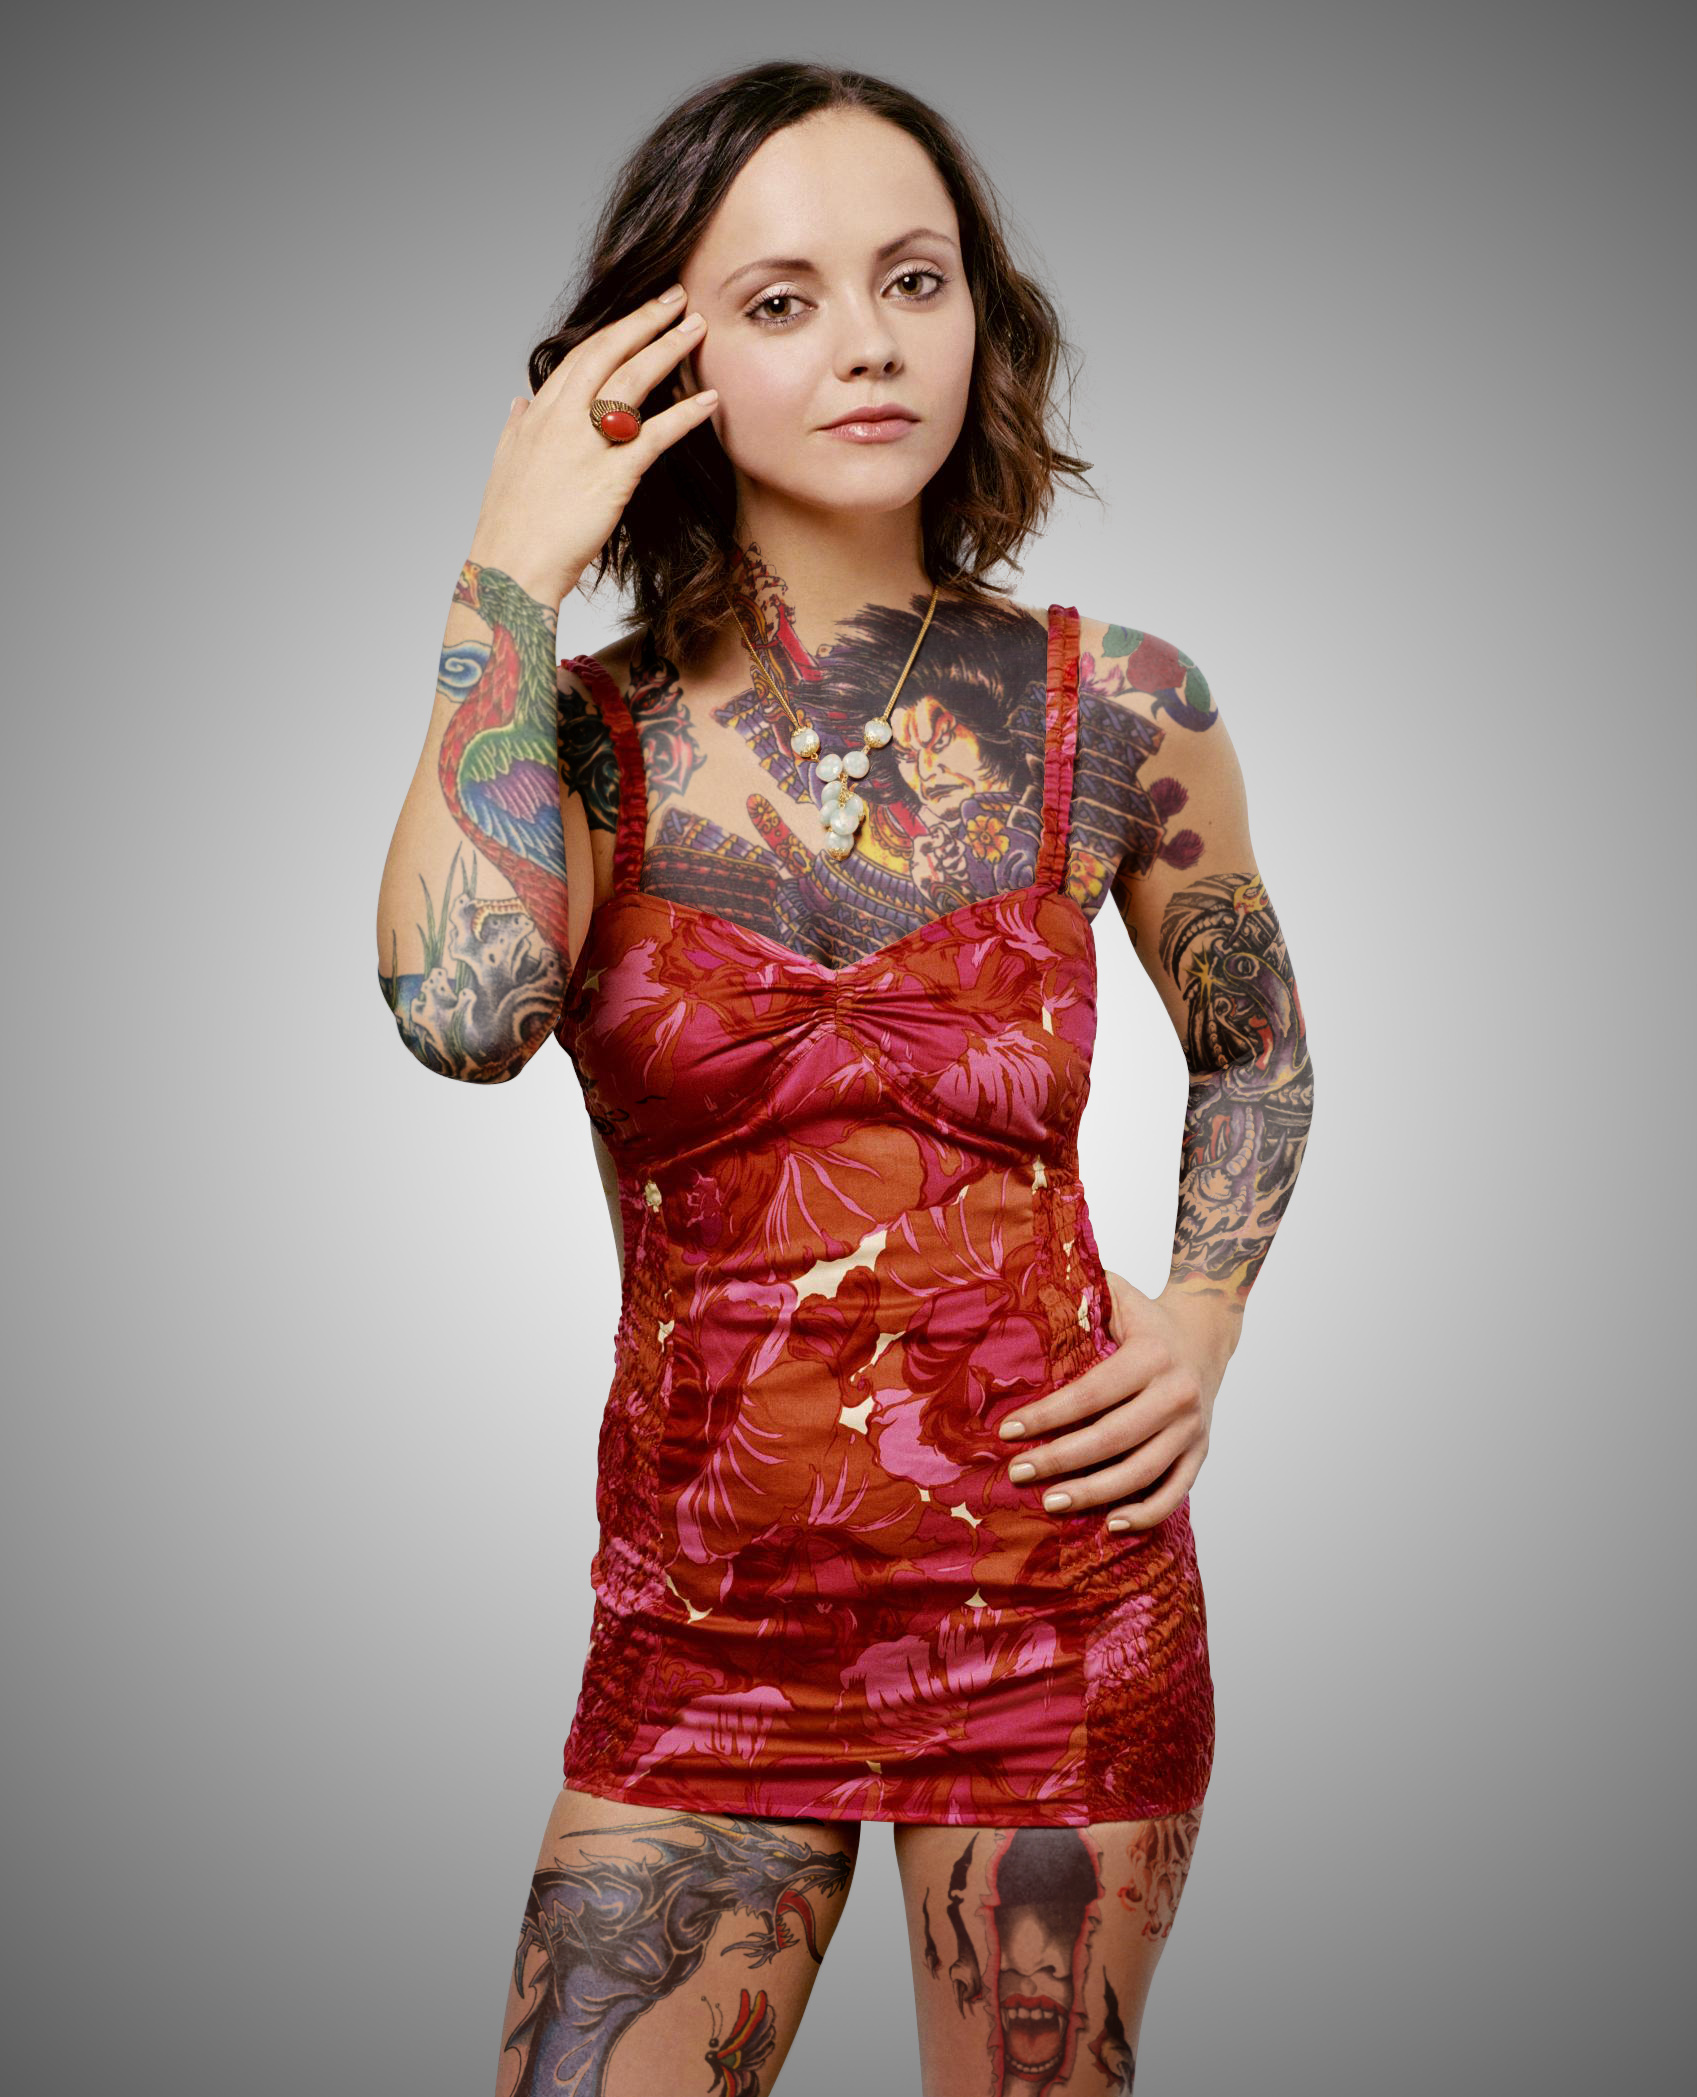 Christina Ricci Digital Tattoos by SamBriggs on DeviantArt